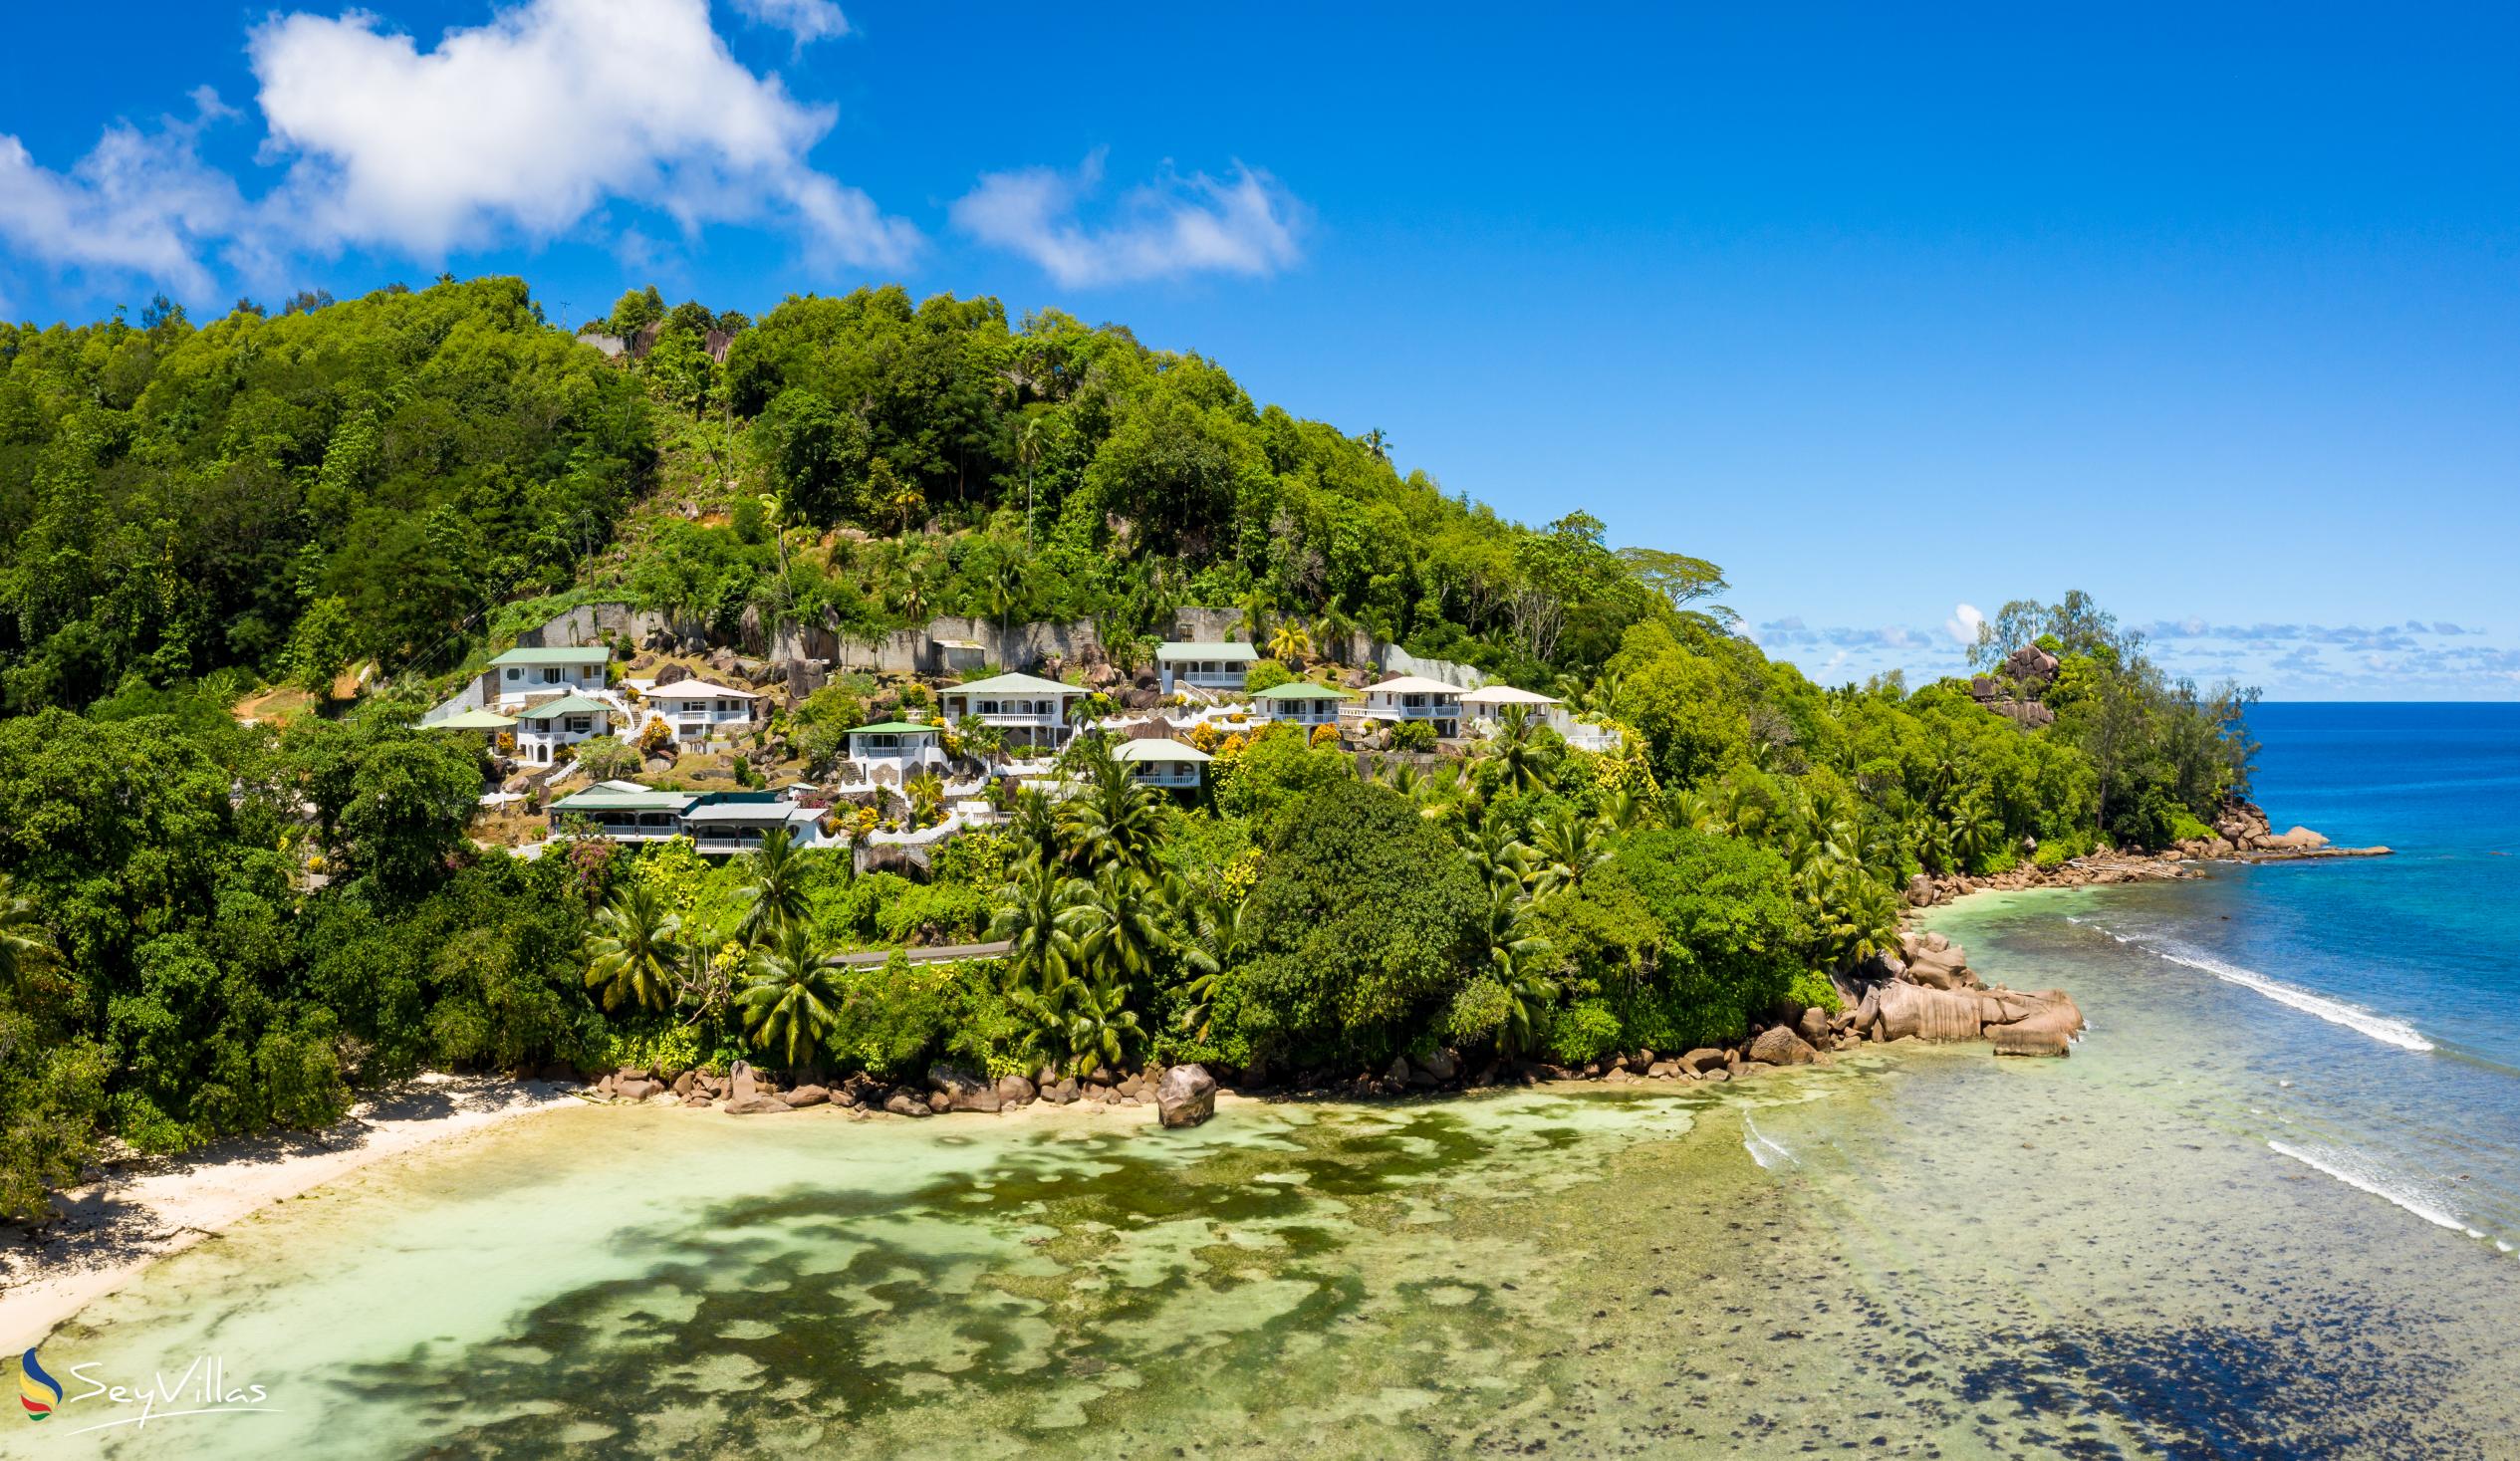 Photo 4: Lazare Picault Hotel - Outdoor area - Mahé (Seychelles)